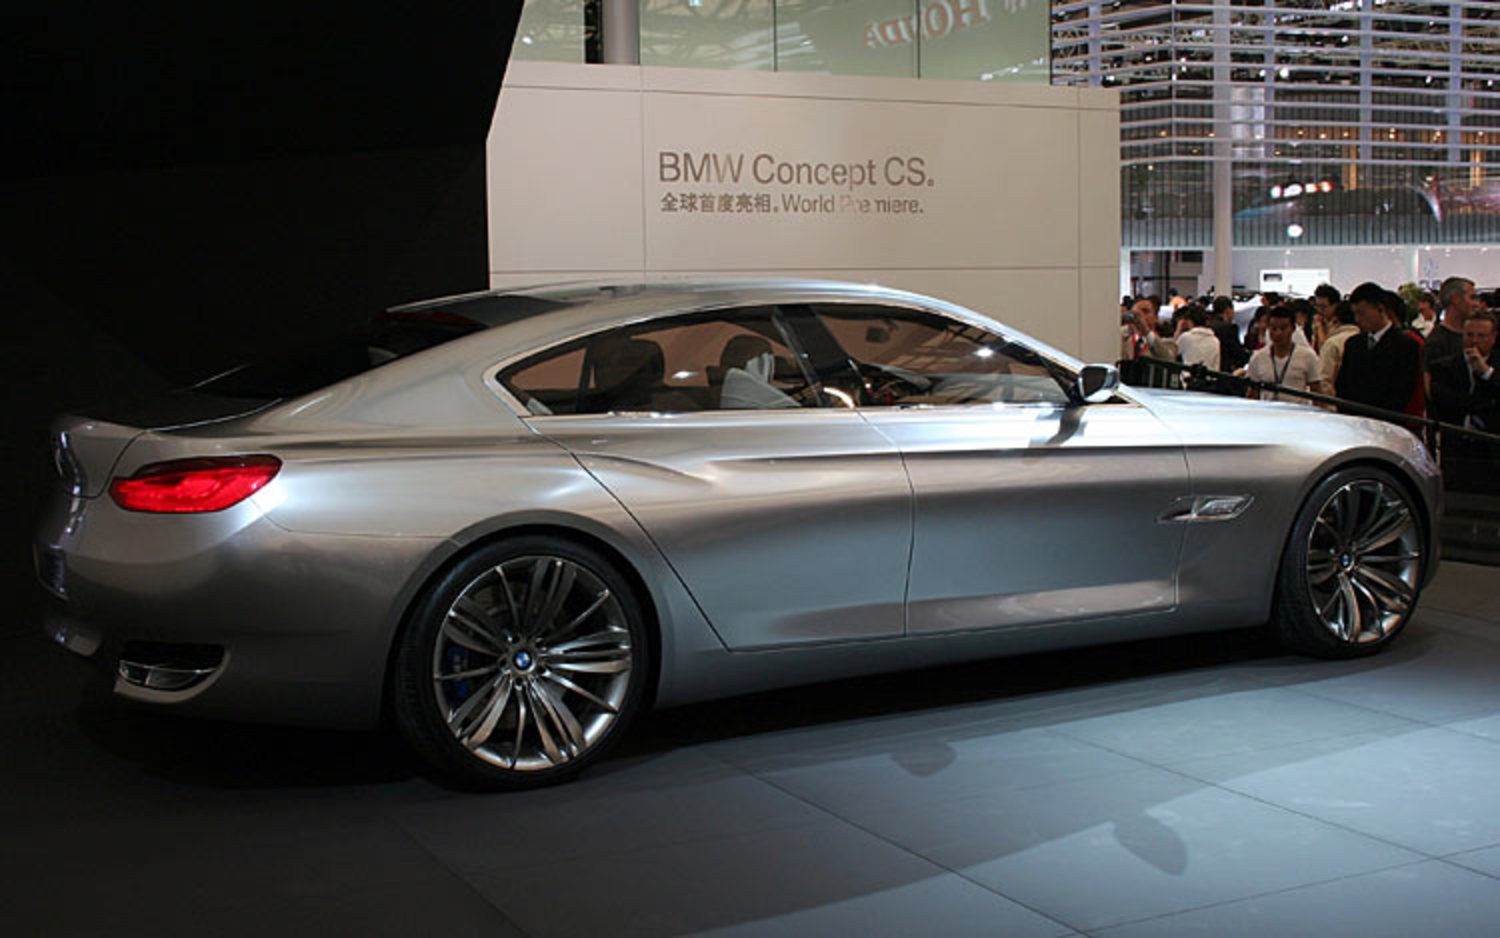 BMW Concept CS - Good Genes or Bad DNA? - BMW 3-Series (E90 E92) Forum